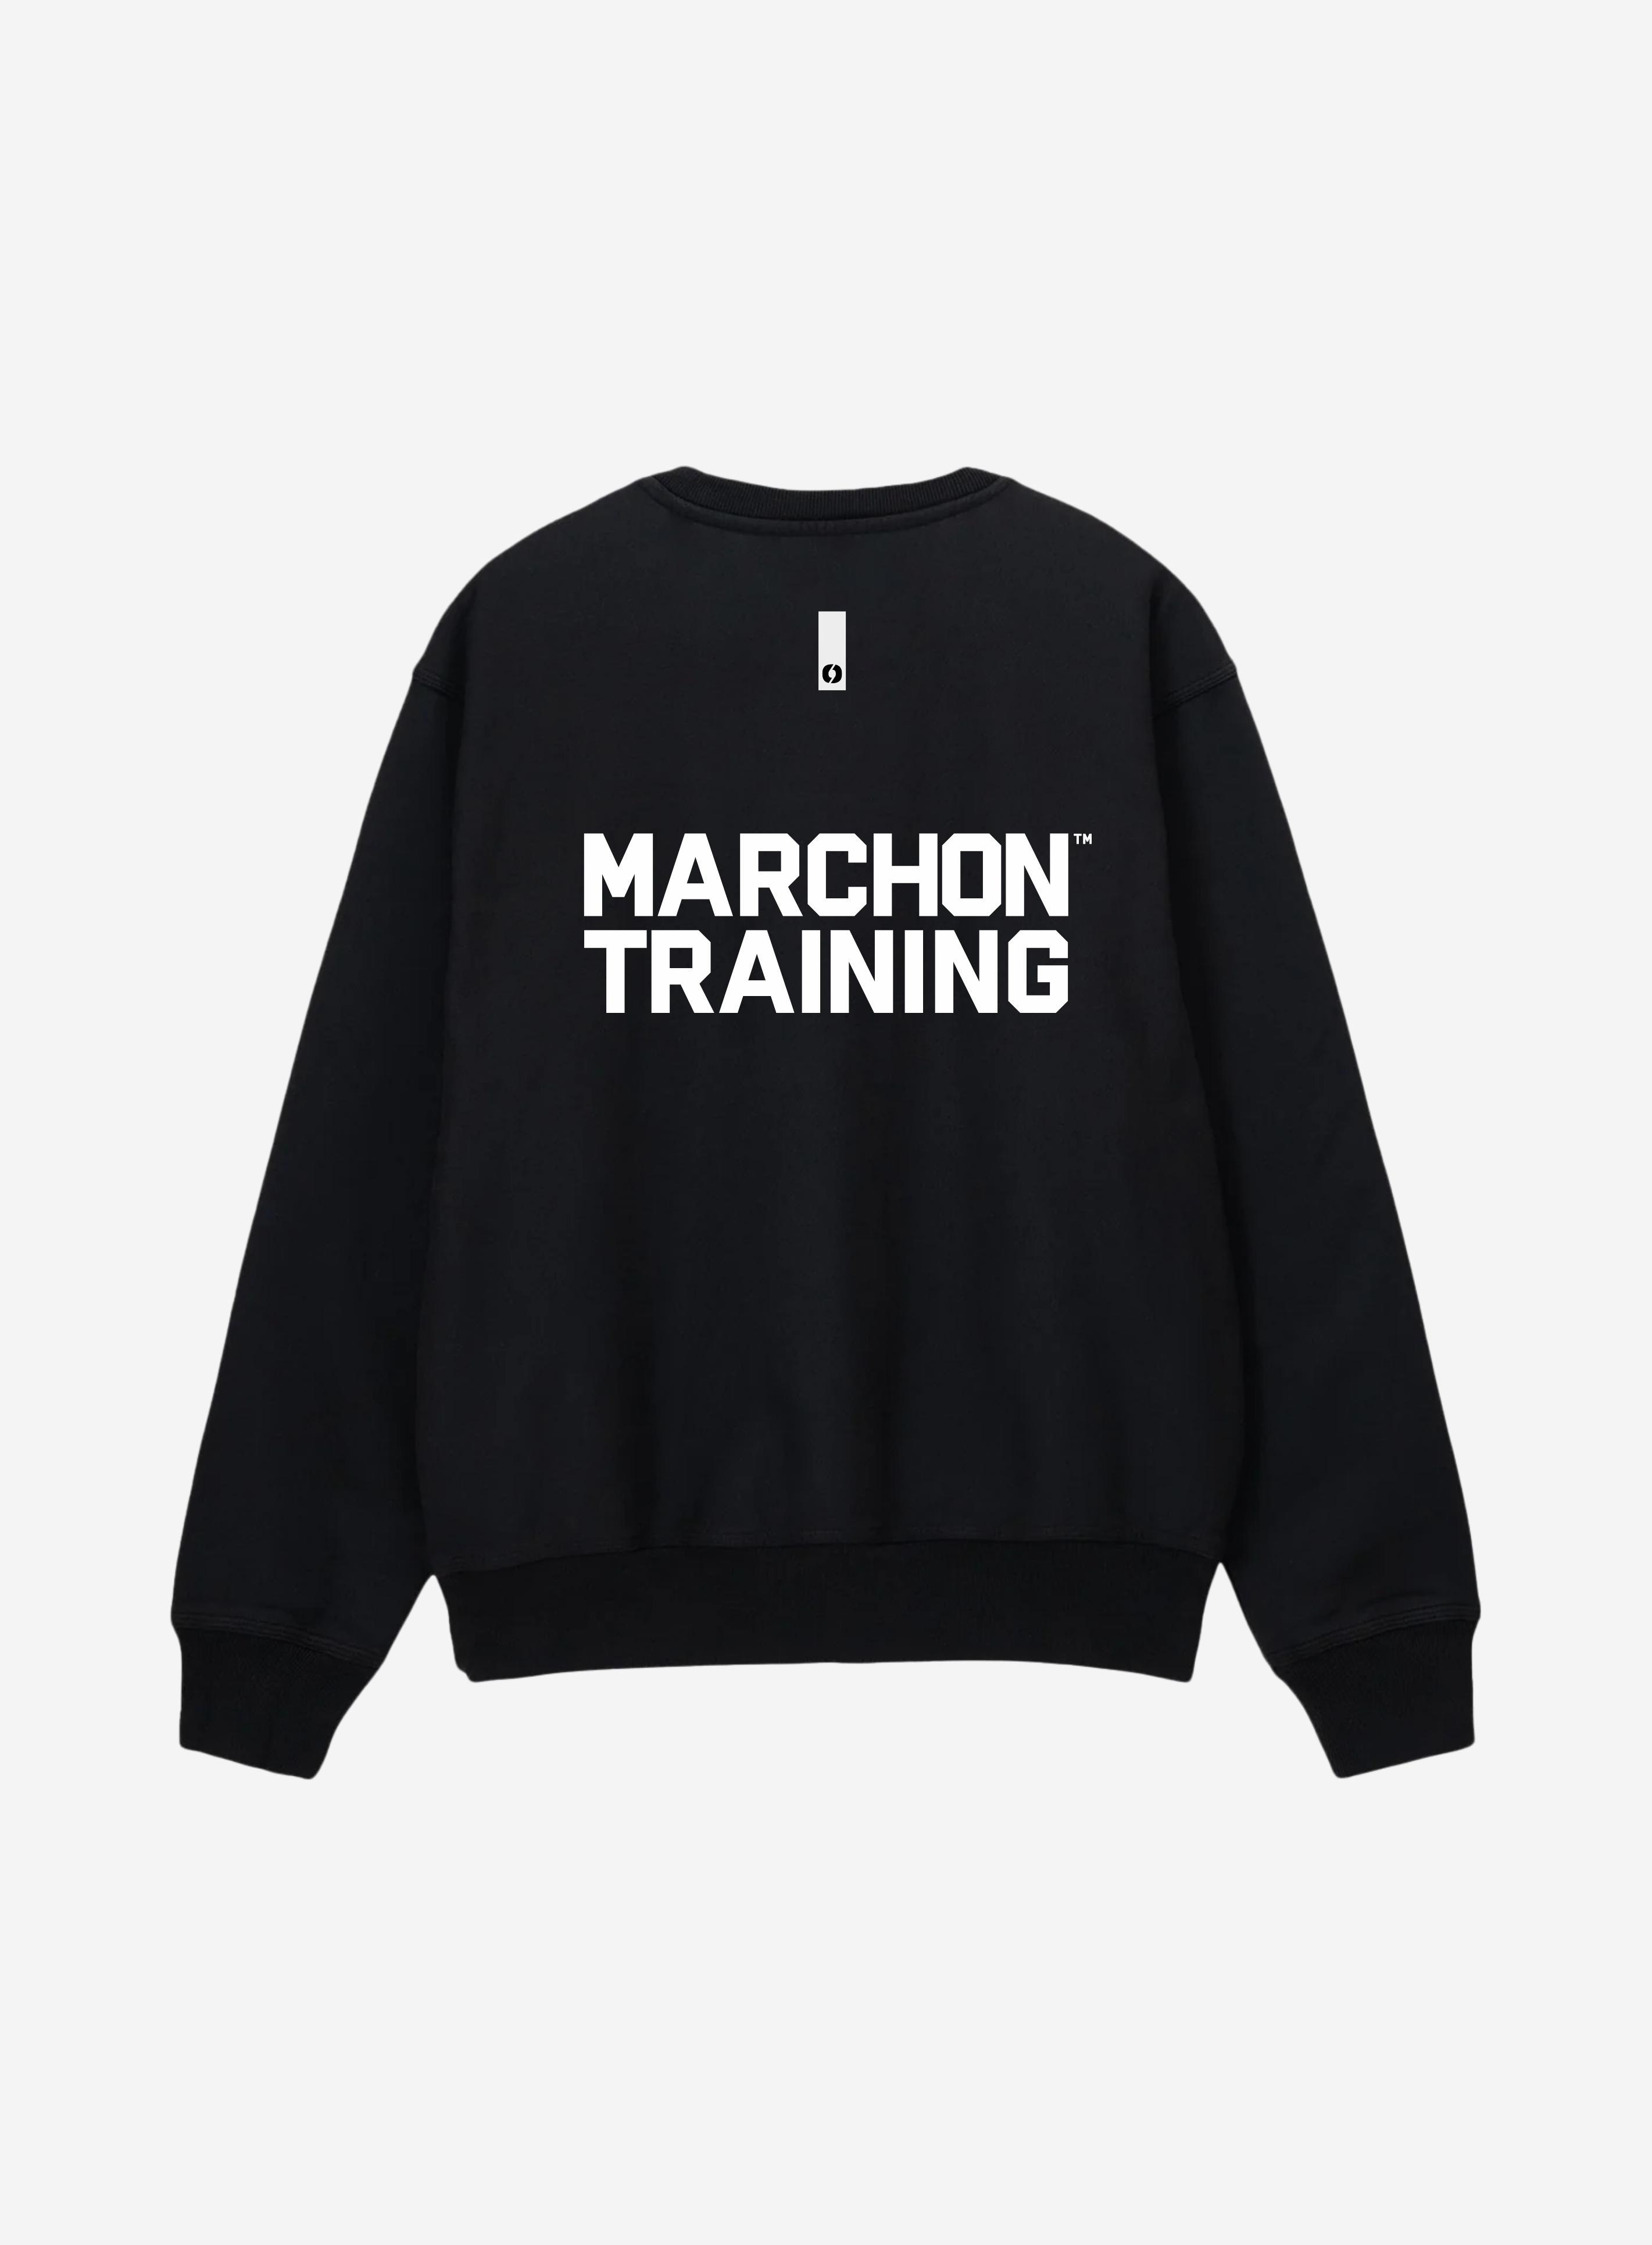 MARCHON™ Training Crewneck Black/White